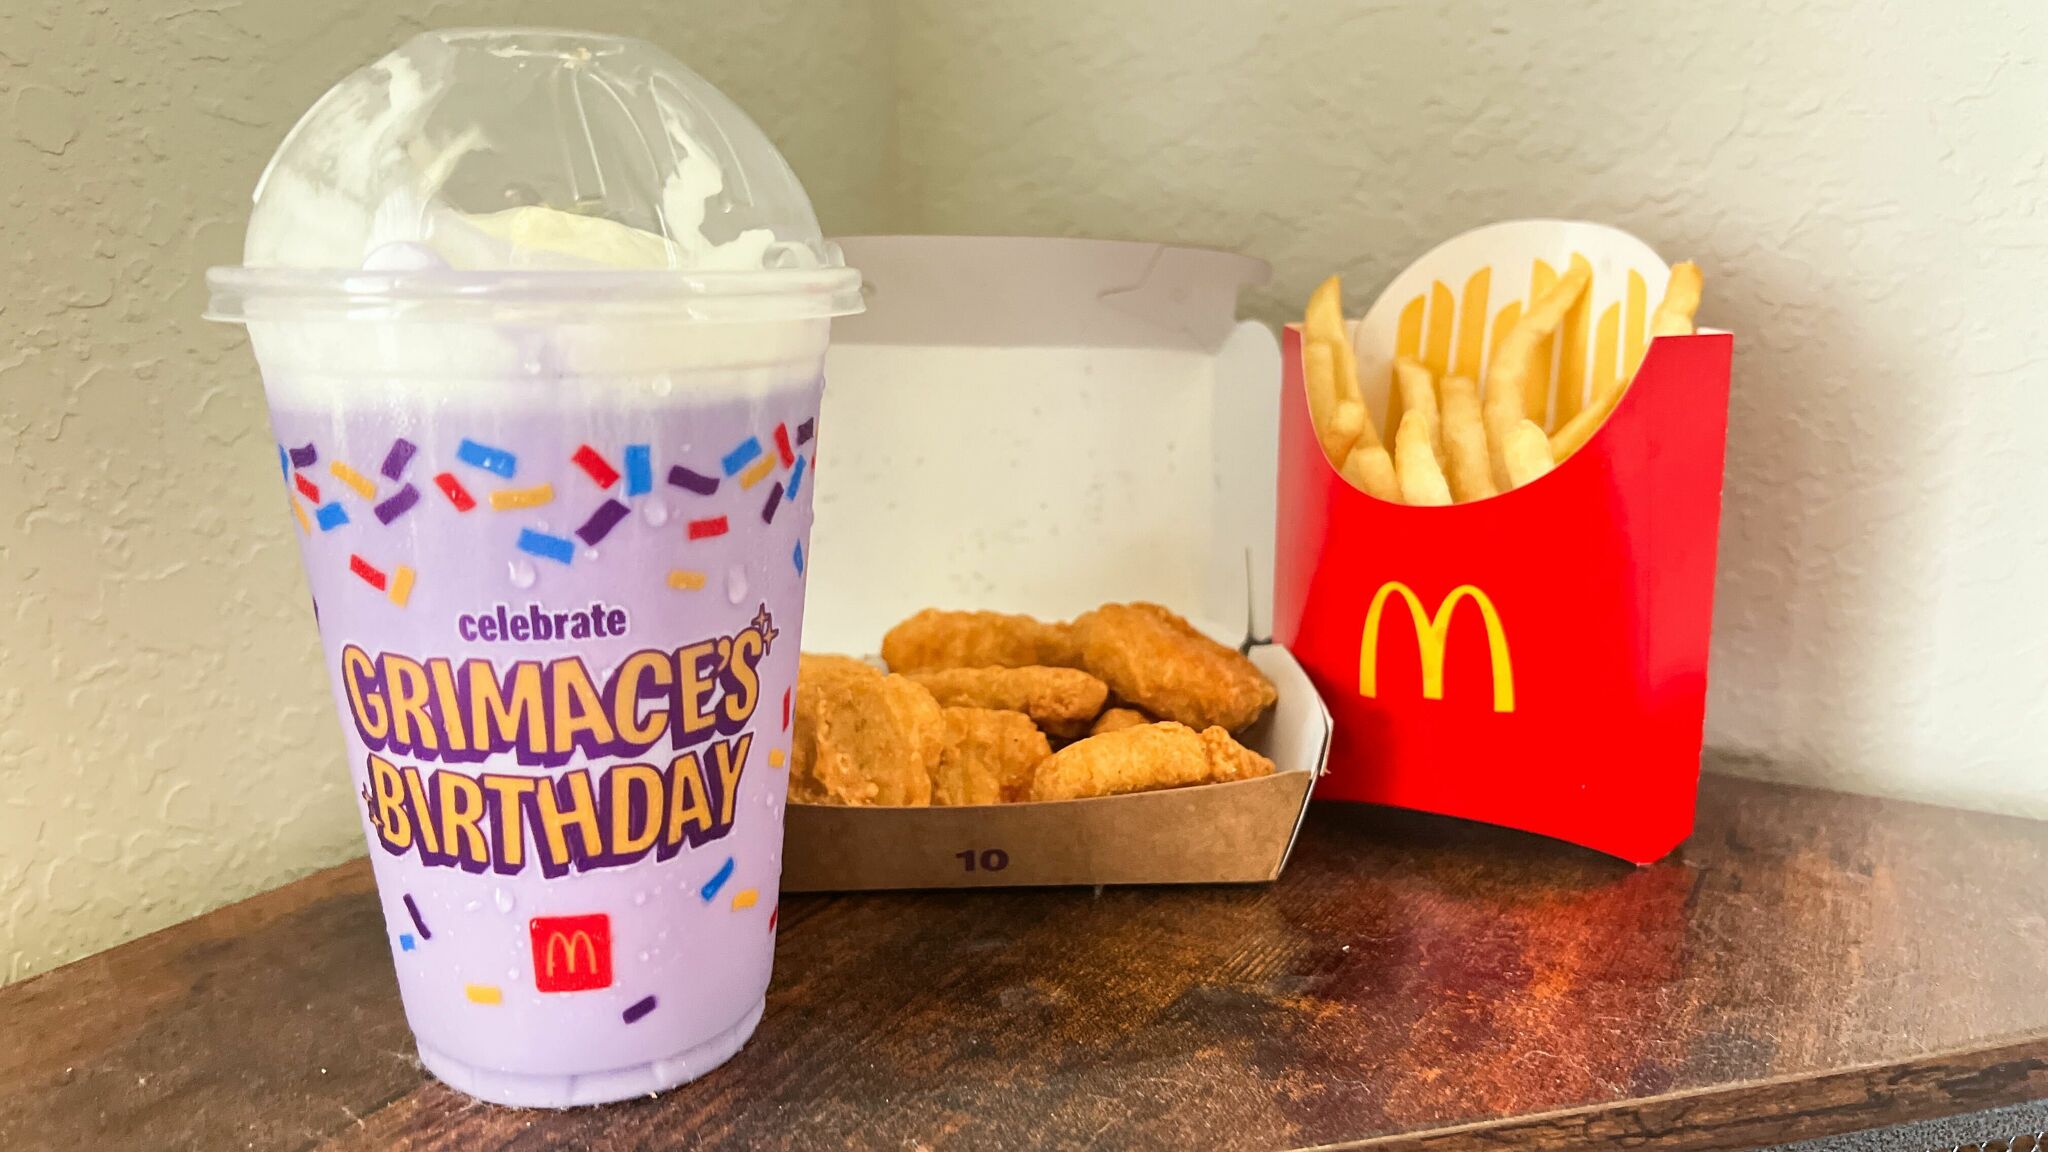 Rating of the McDonald's grimace birthday milkshake